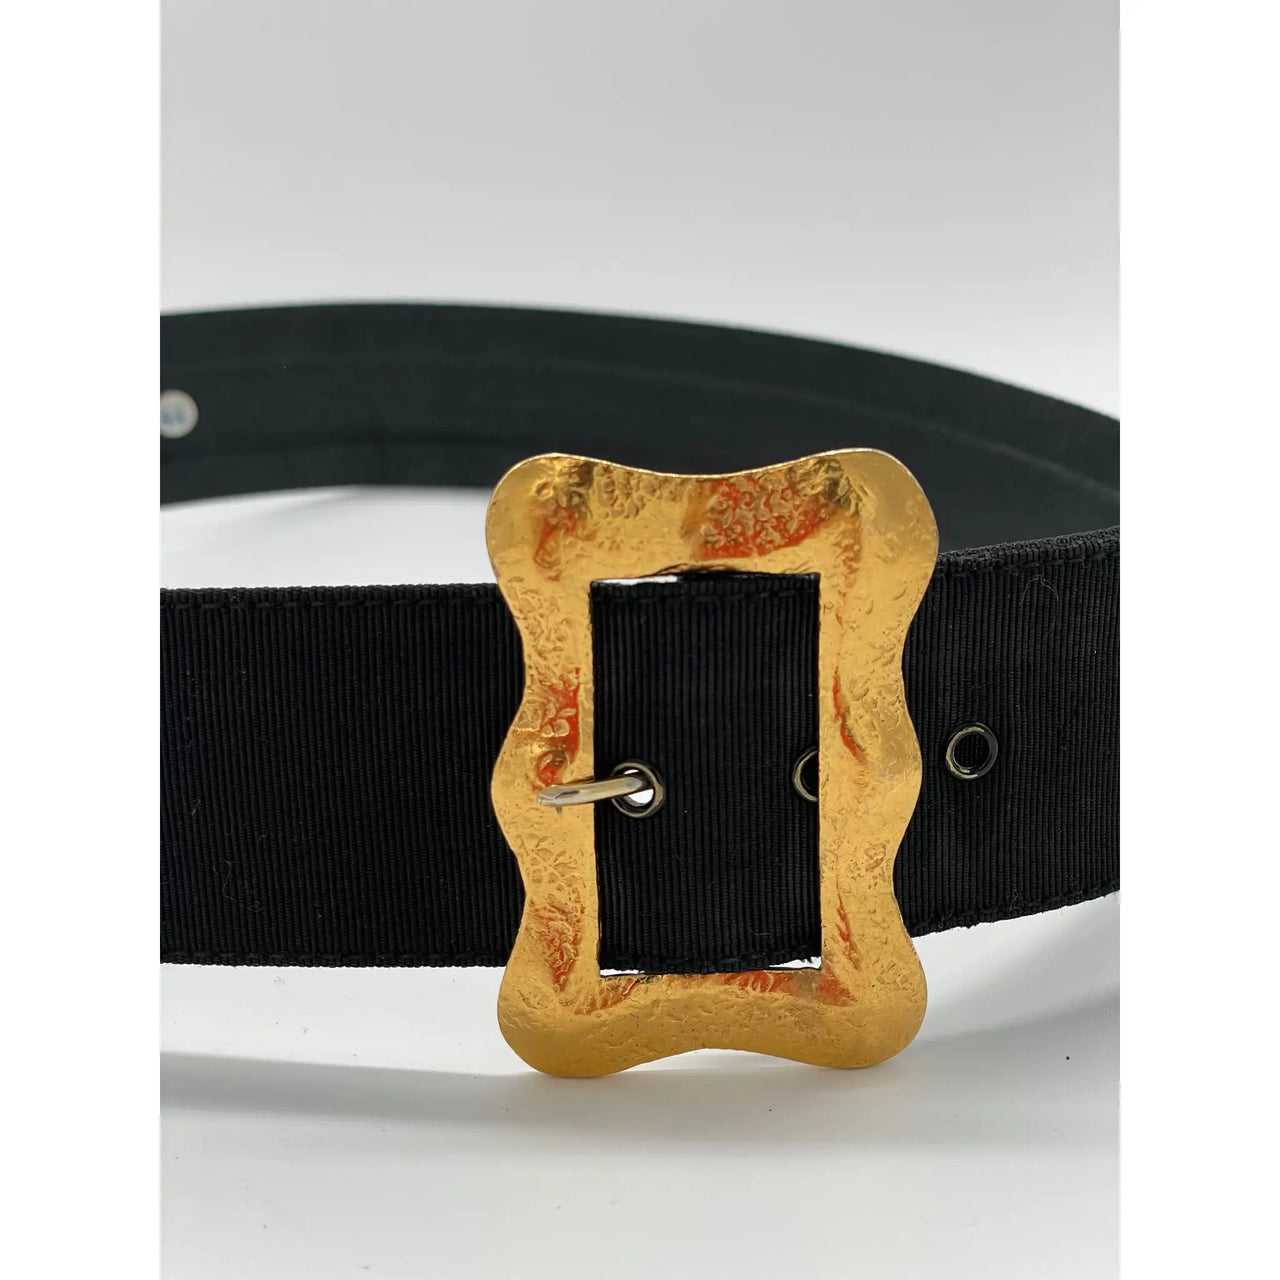 Vintage Chanel Belt – Comptoir Vintage